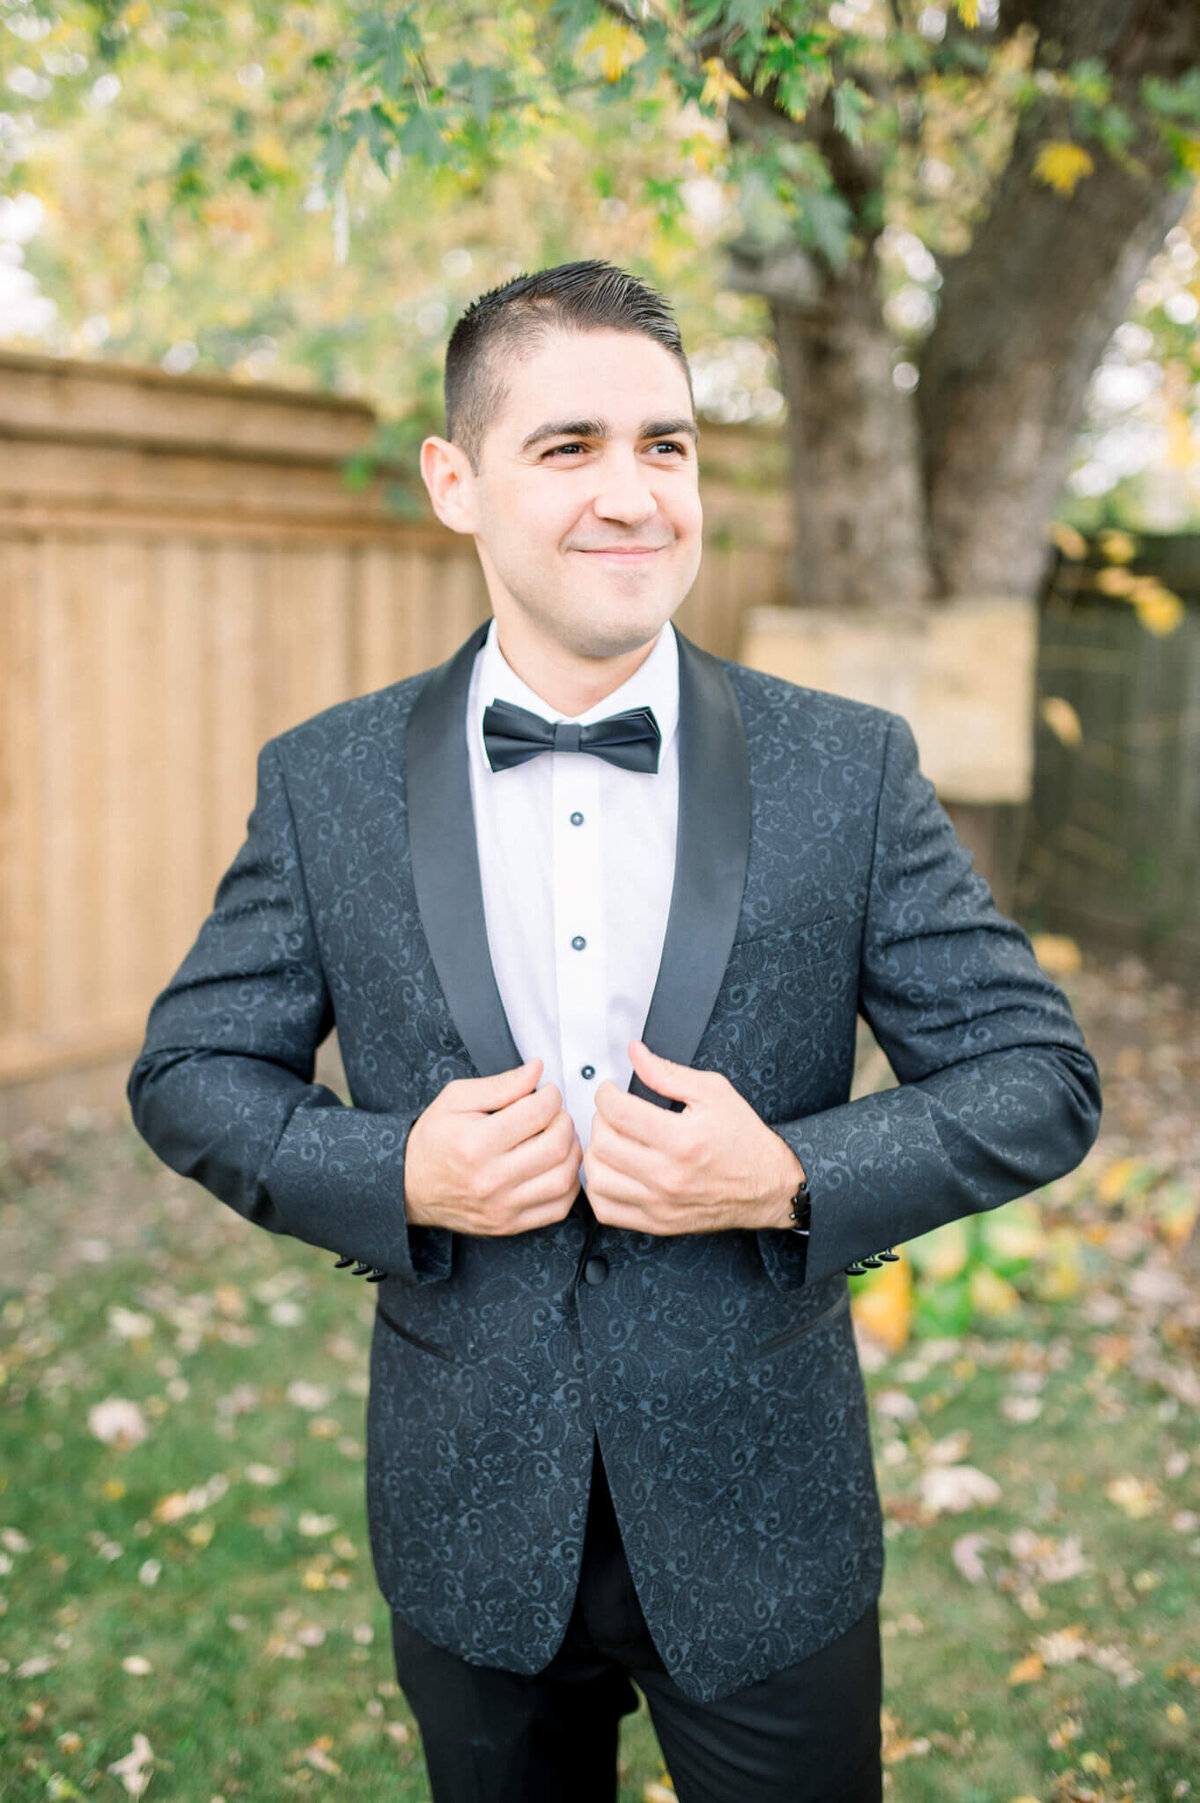 Groom adjusts jacket while smiling. Captured by Niagara wedding photographer